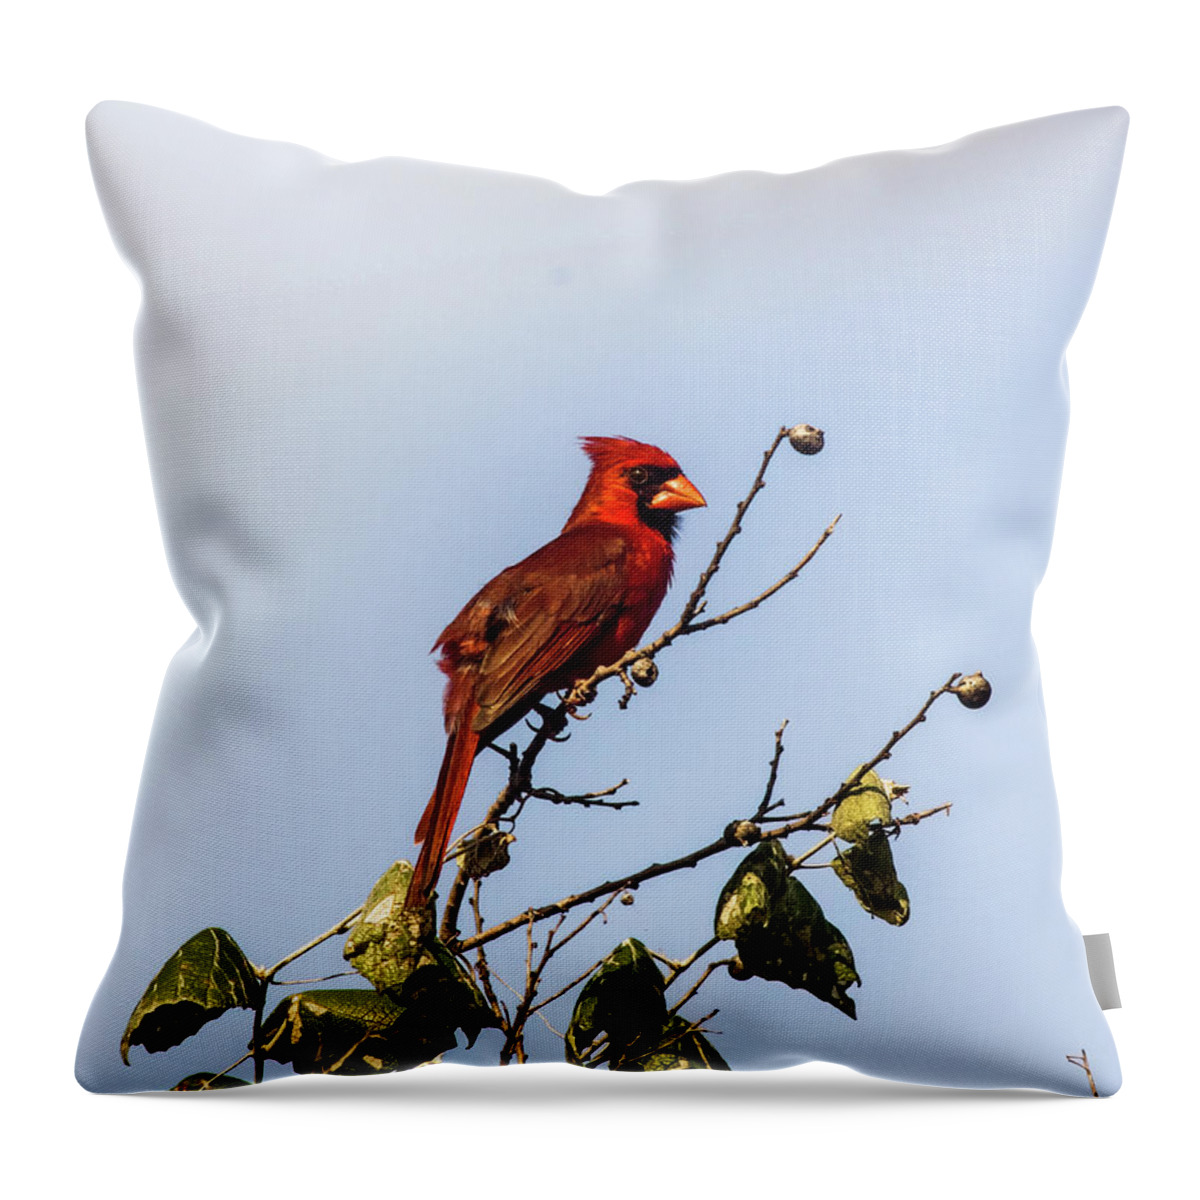 Animal Throw Pillow featuring the photograph Cardinal On Treetop by Robert Frederick